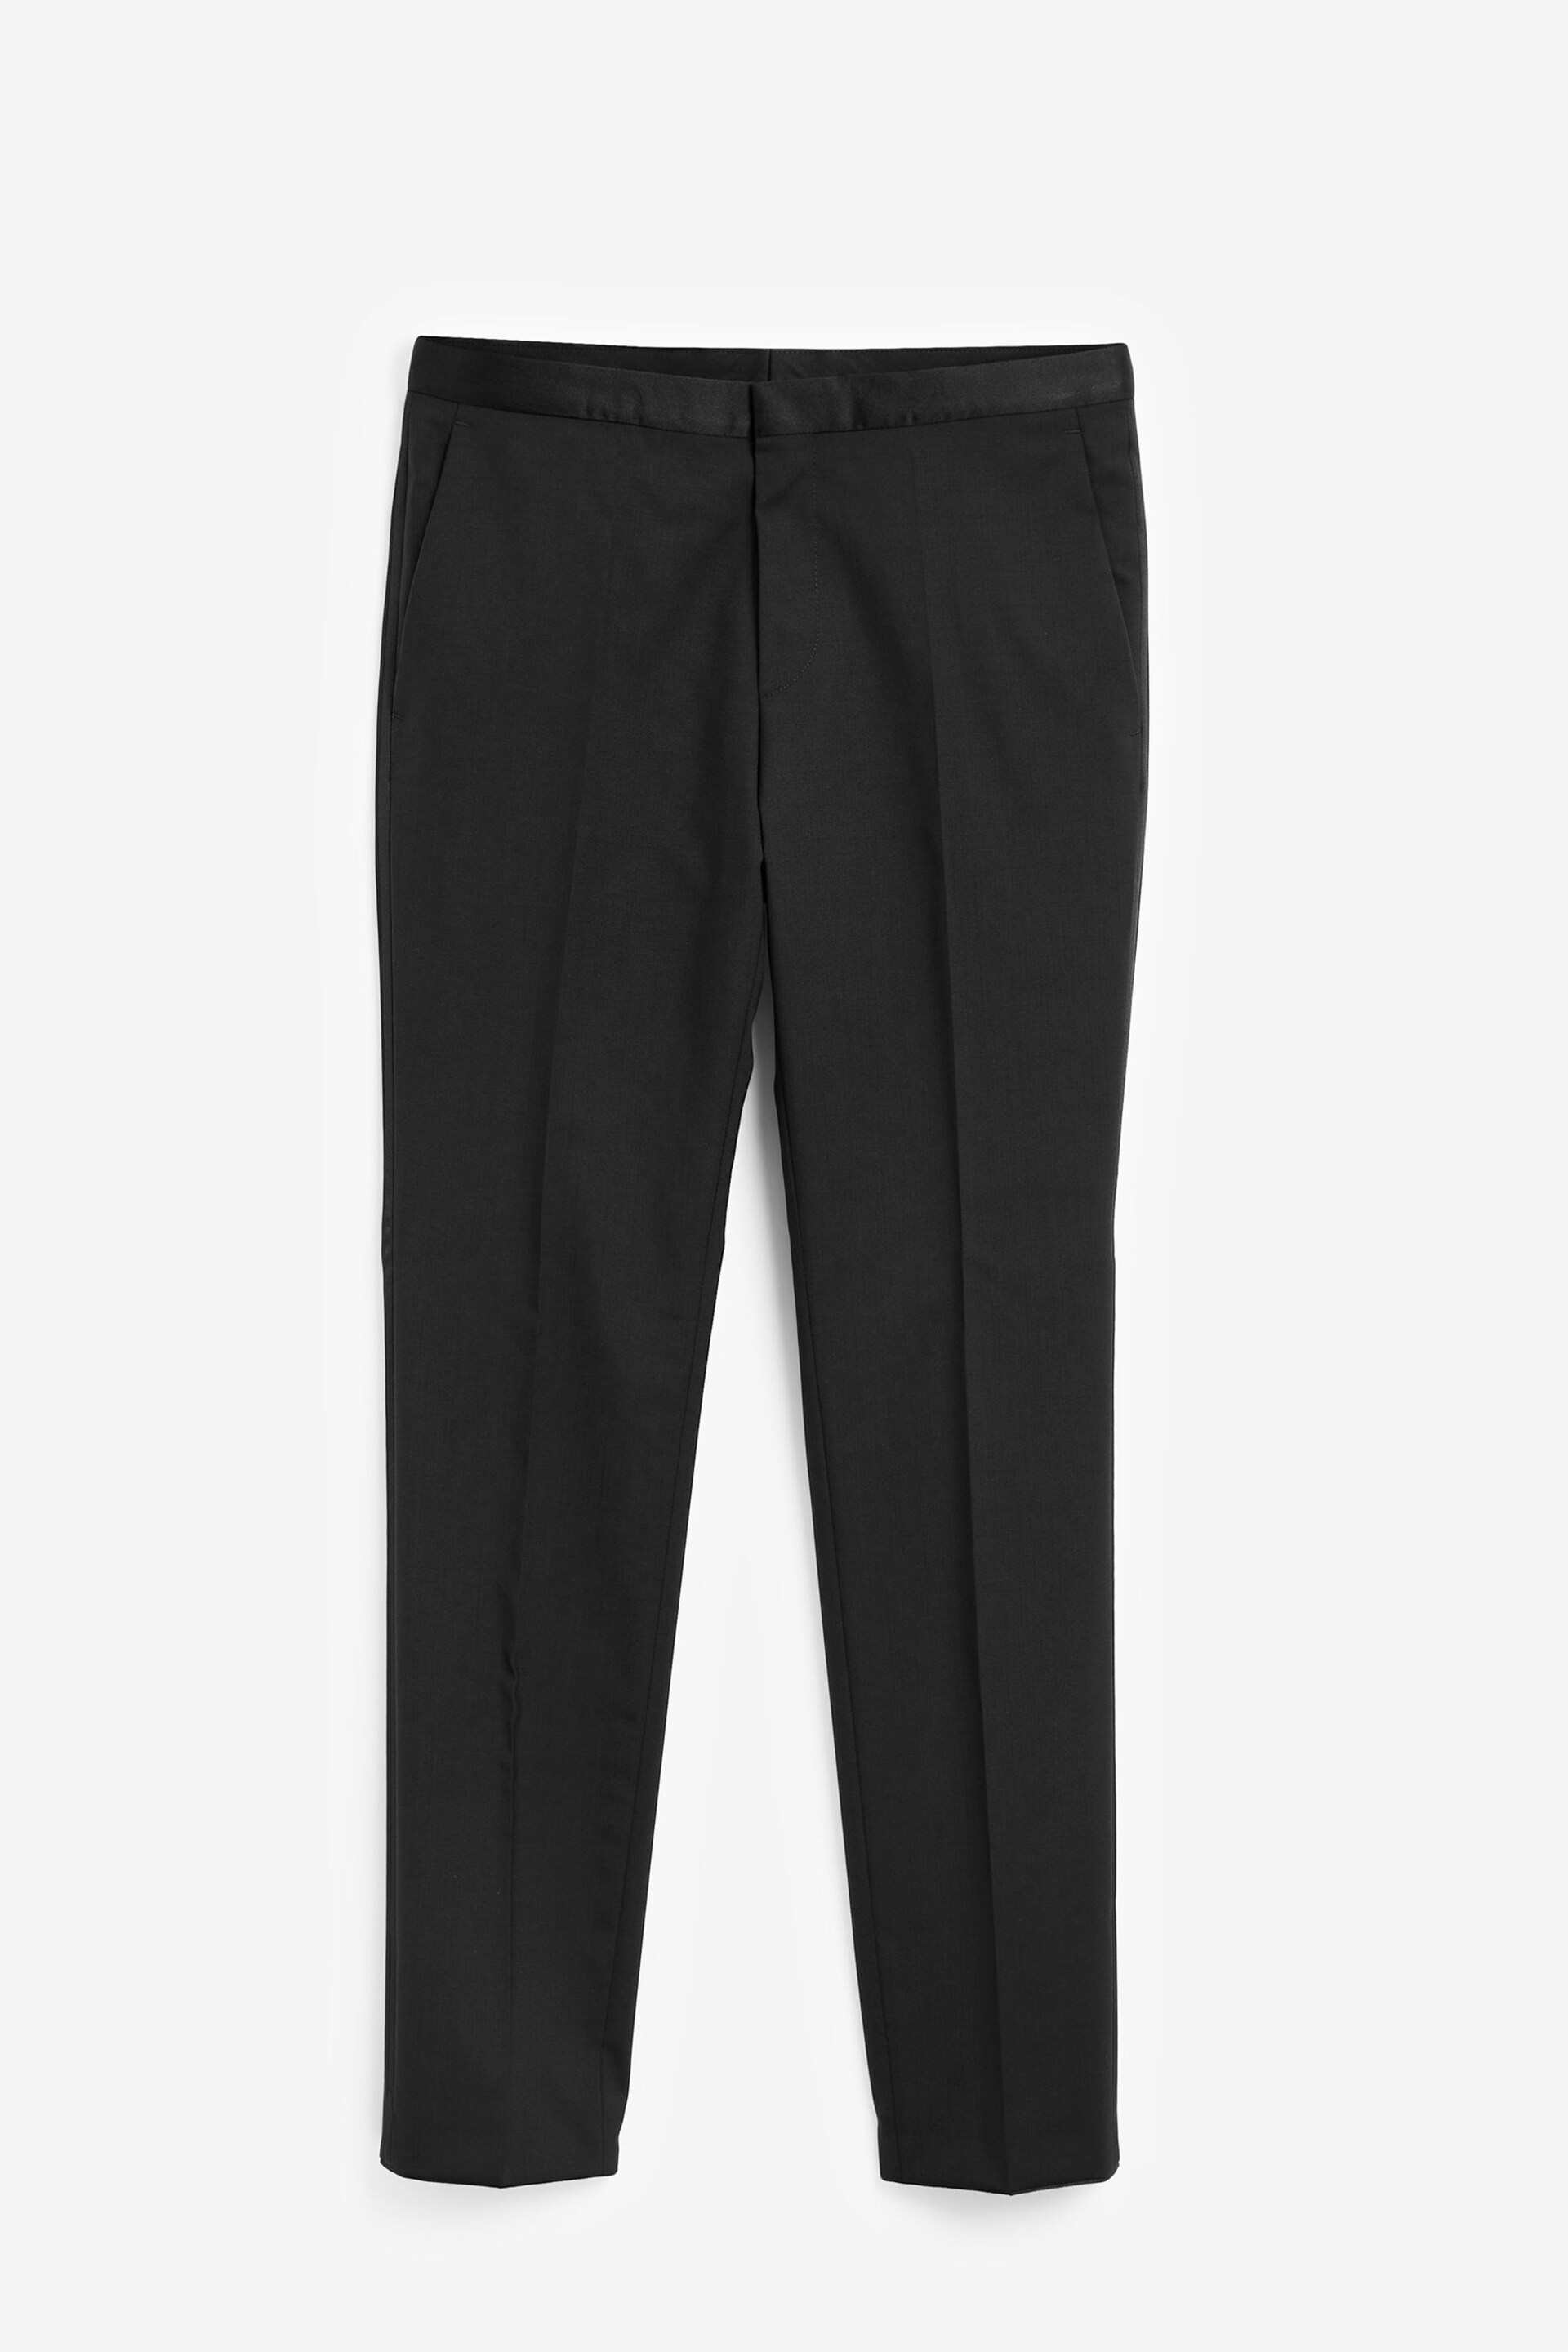 HUGO Black Regular Fit Wool Blend Trousers - Image 4 of 4